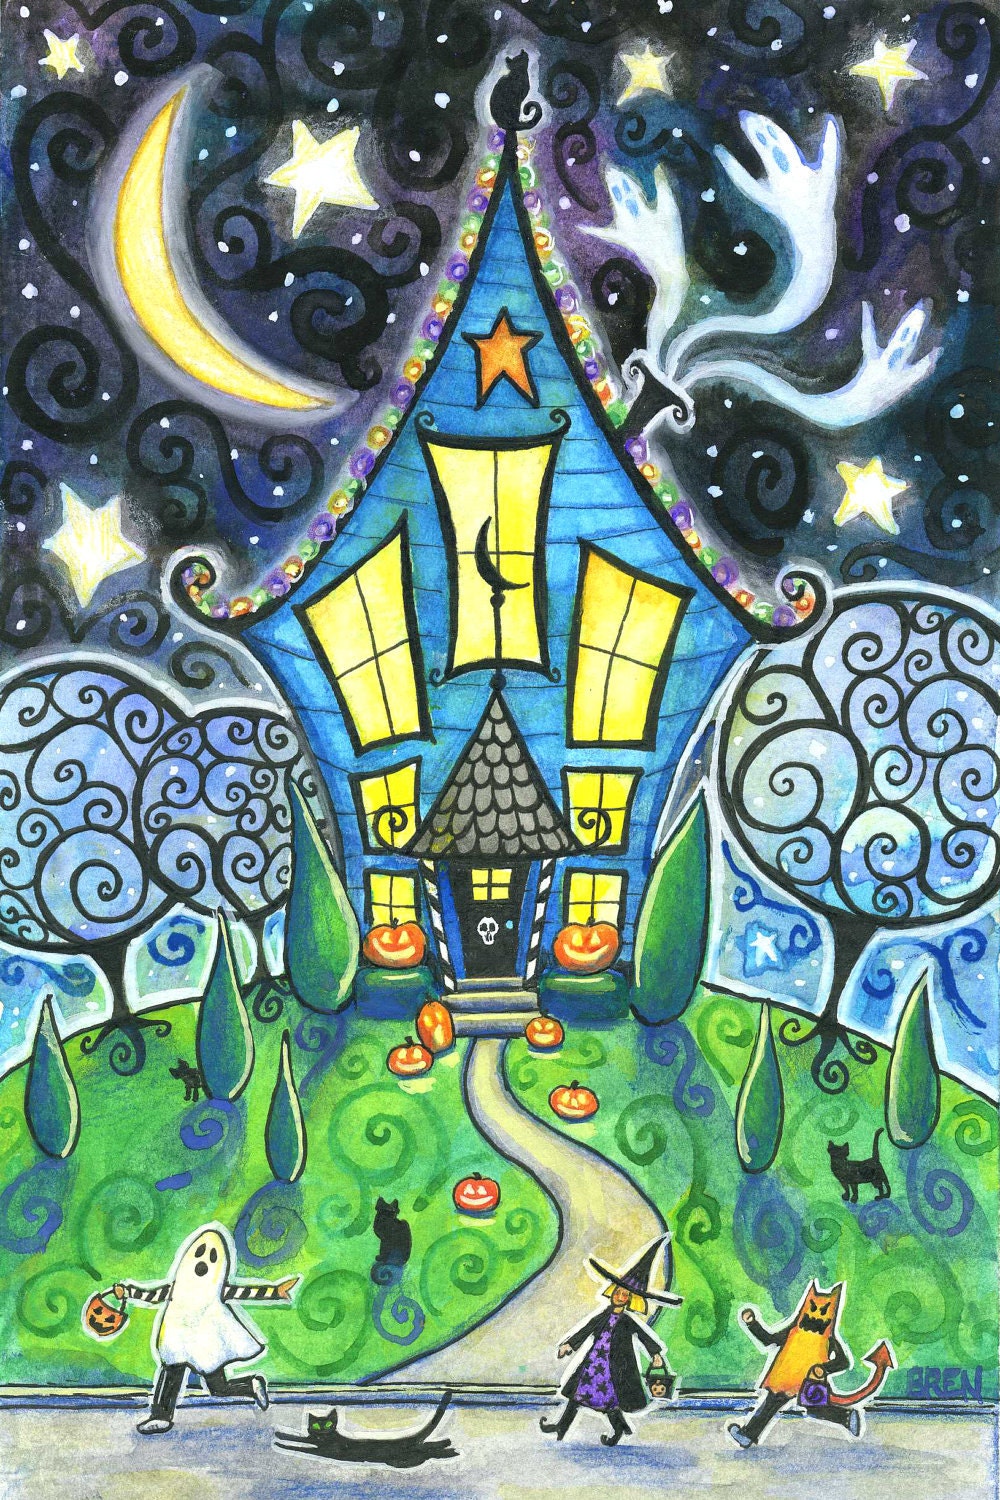 The Halloween House - 6x9 print - by Brenna White - ghosts black cat  moon stars fall autumn halloween